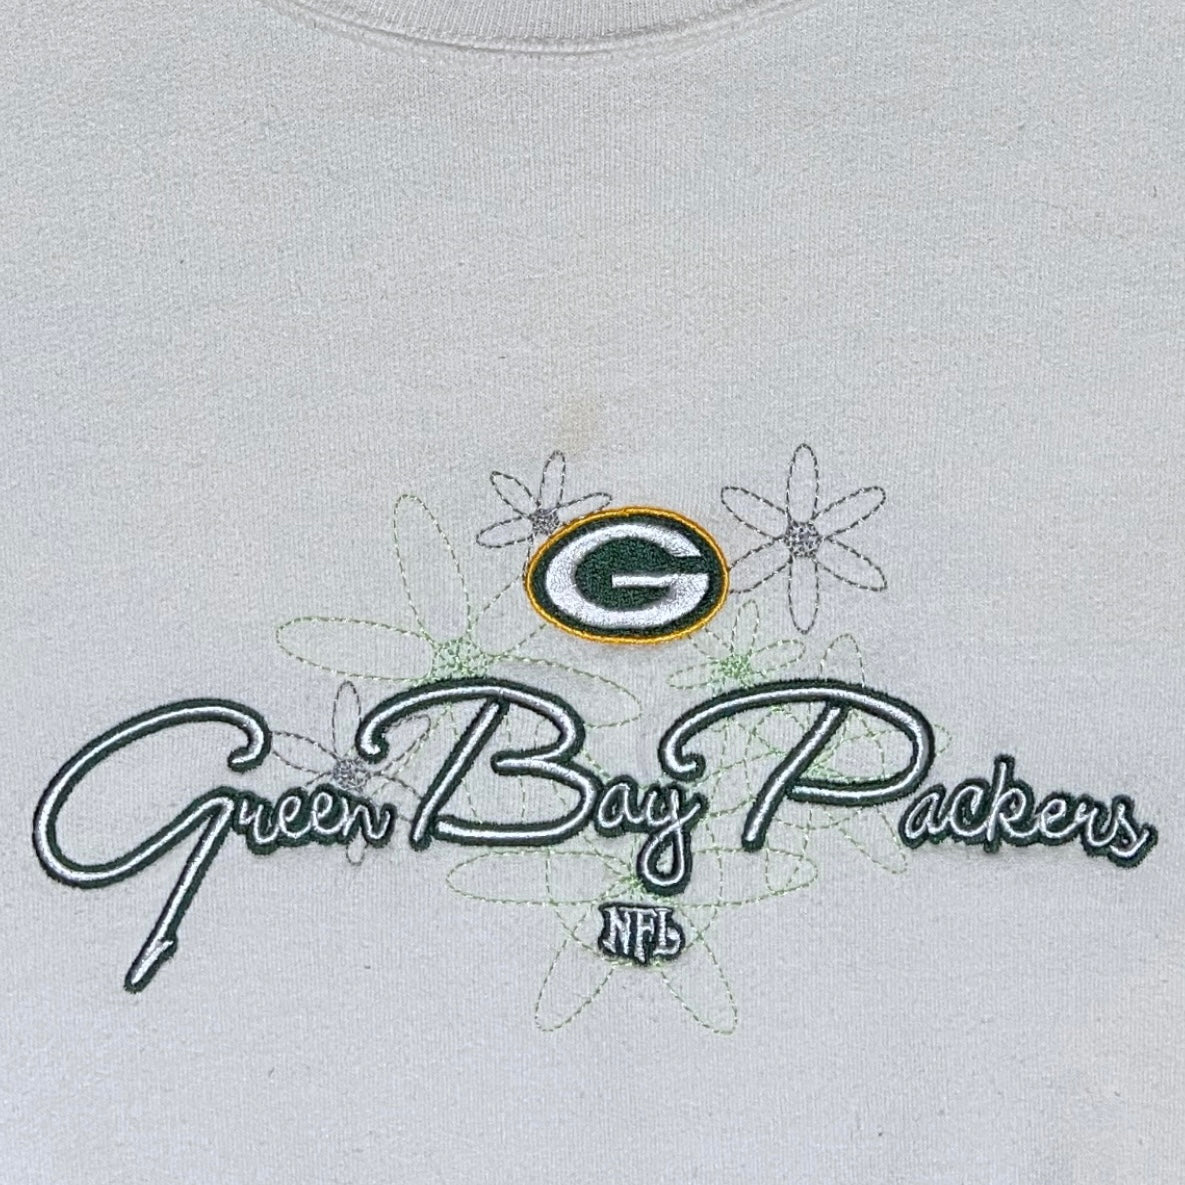 Green Bay Packers sweater - M (women's)